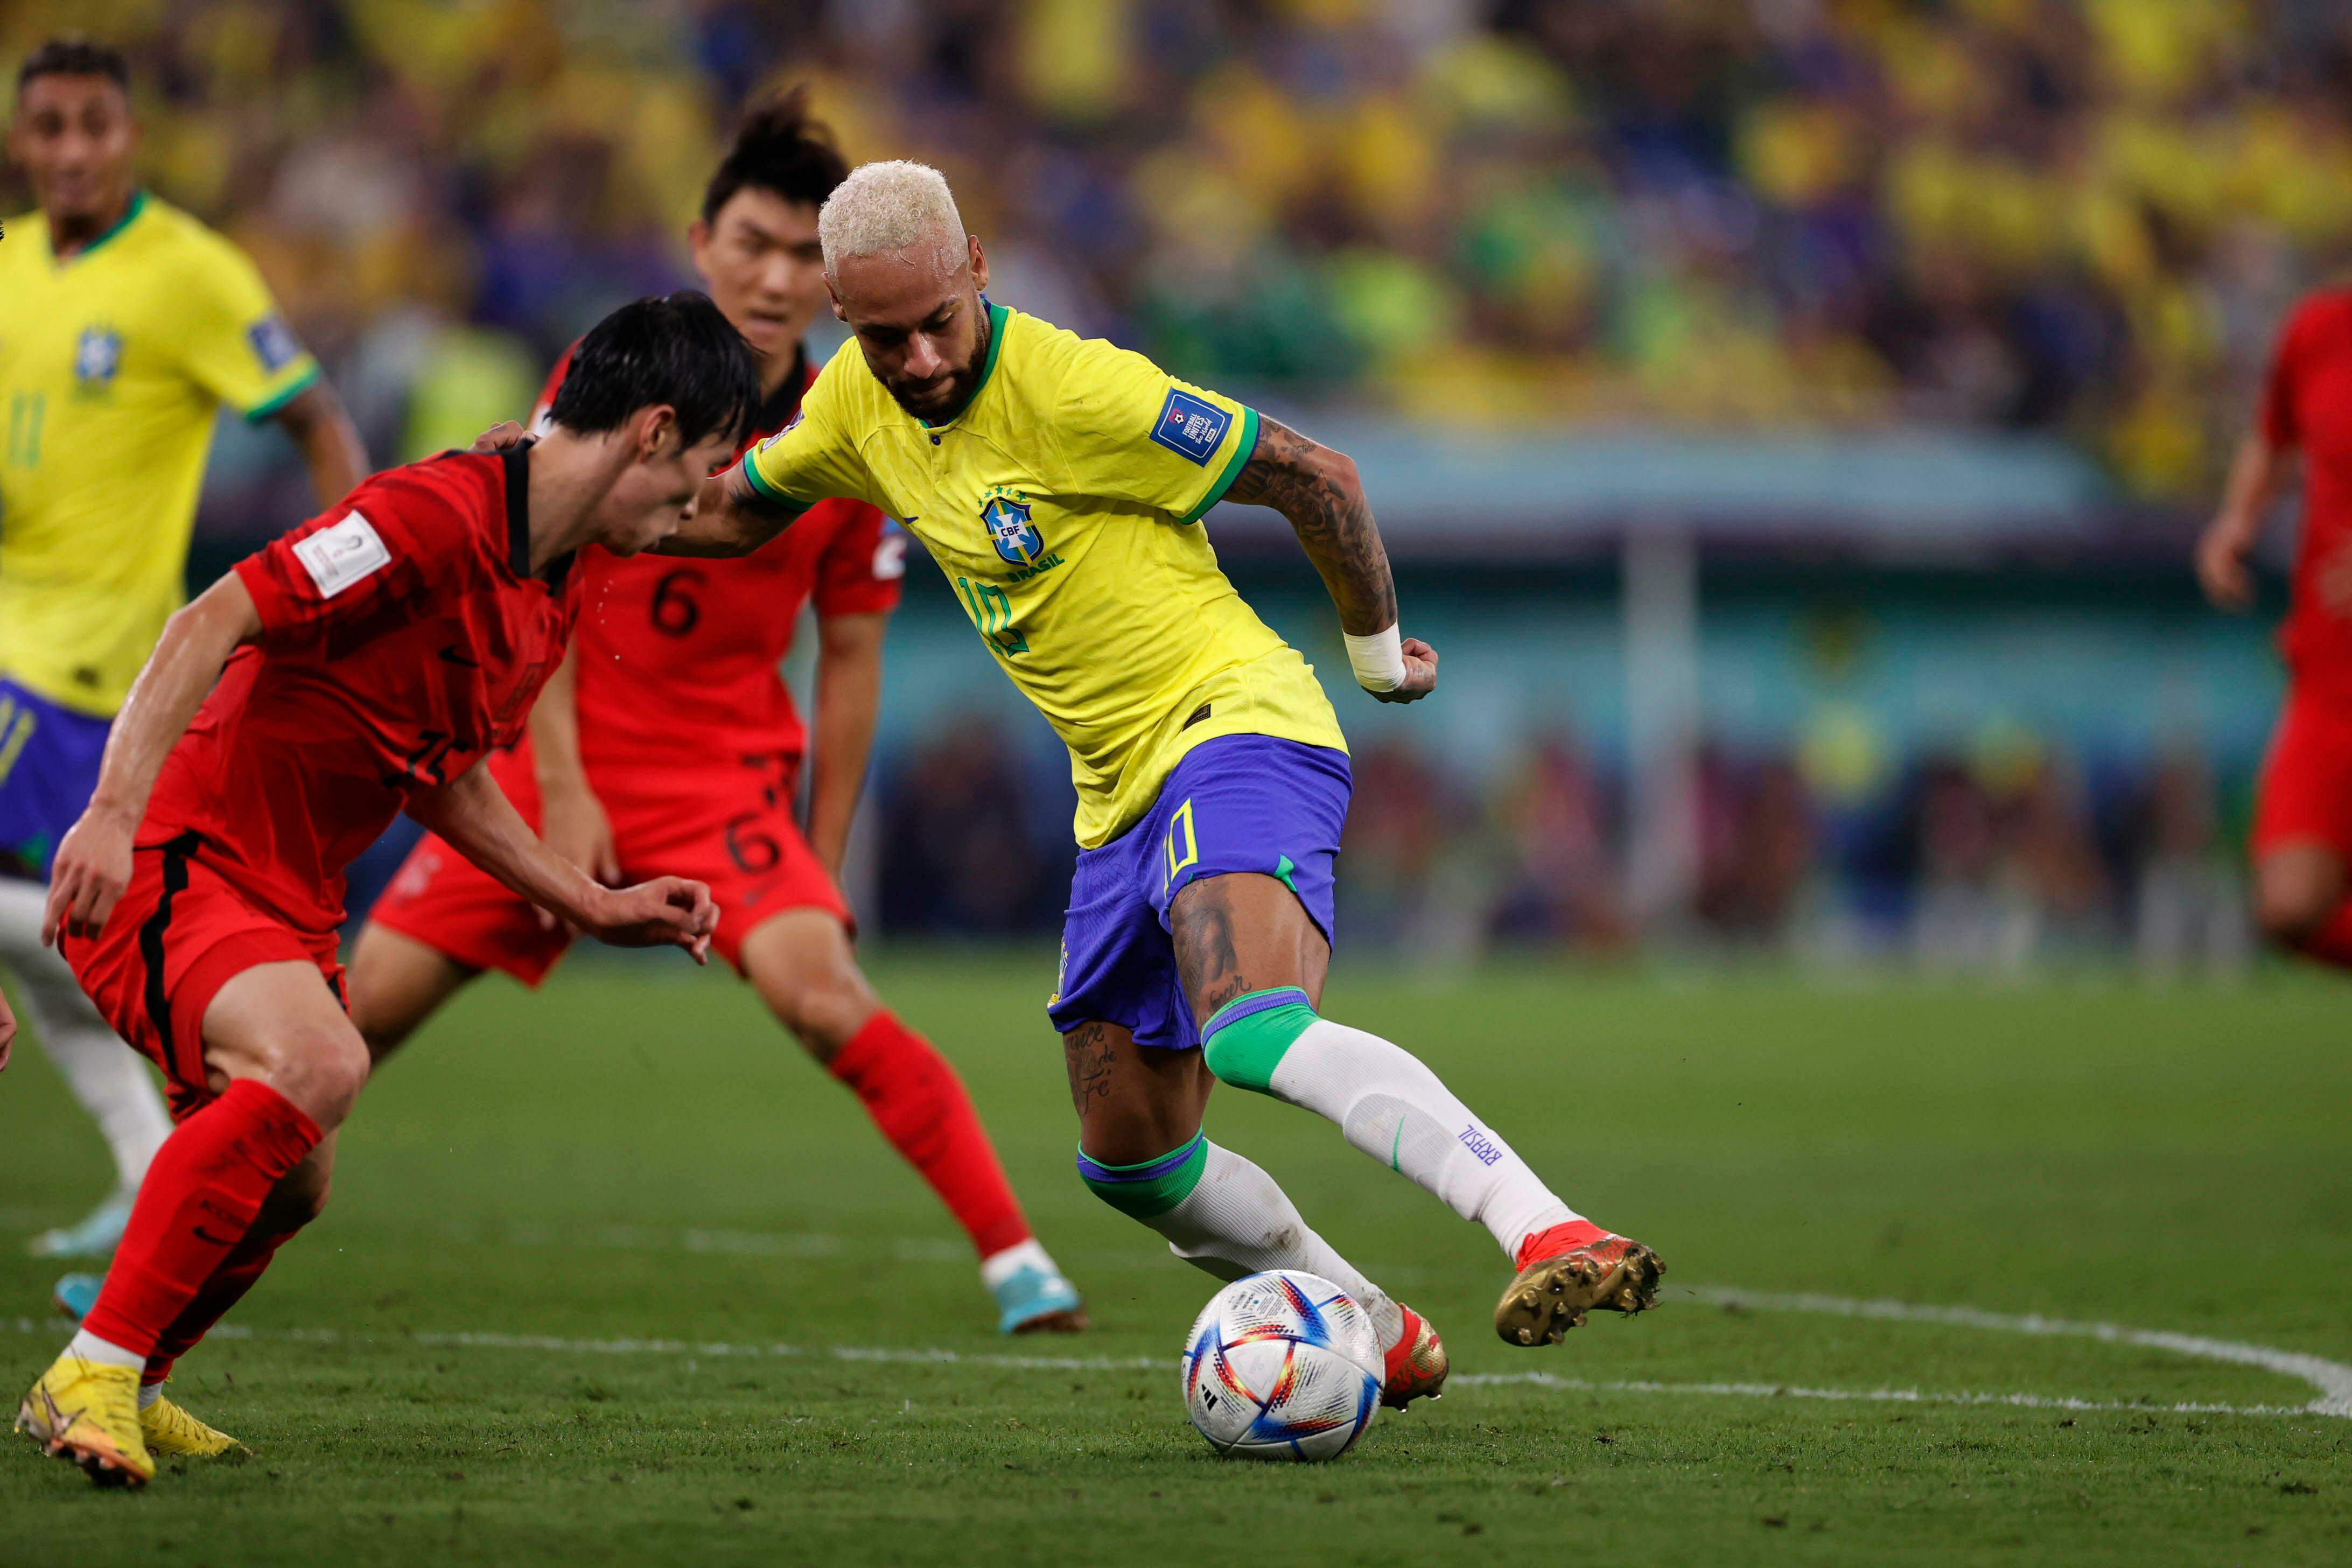 Copa do Mundo: onde assistir online o jogo Brasil x Croácia nesta  sexta-feira (9) – Metro World News Brasil